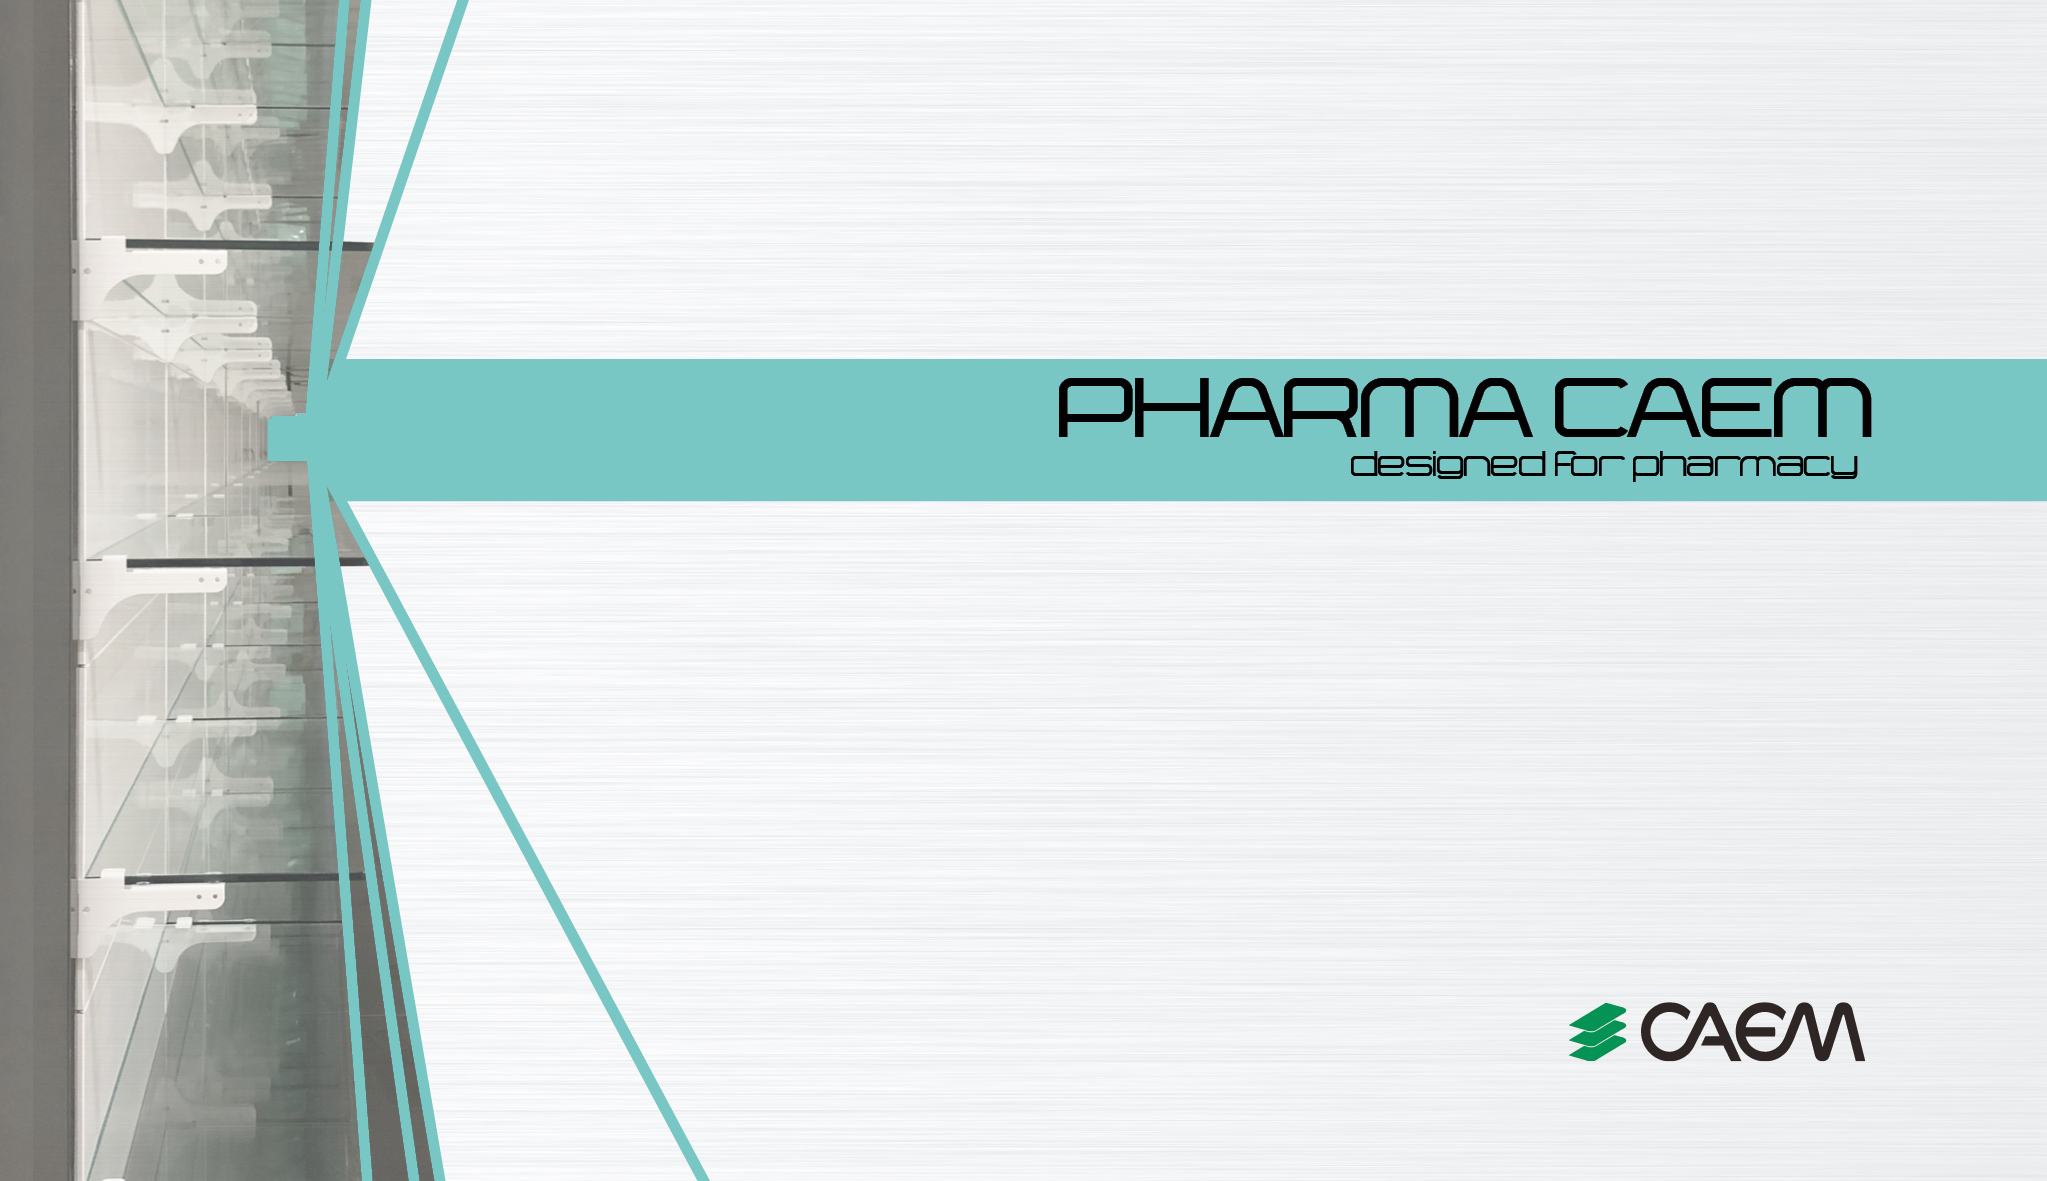 PharmaCAEM Catlogue 2021